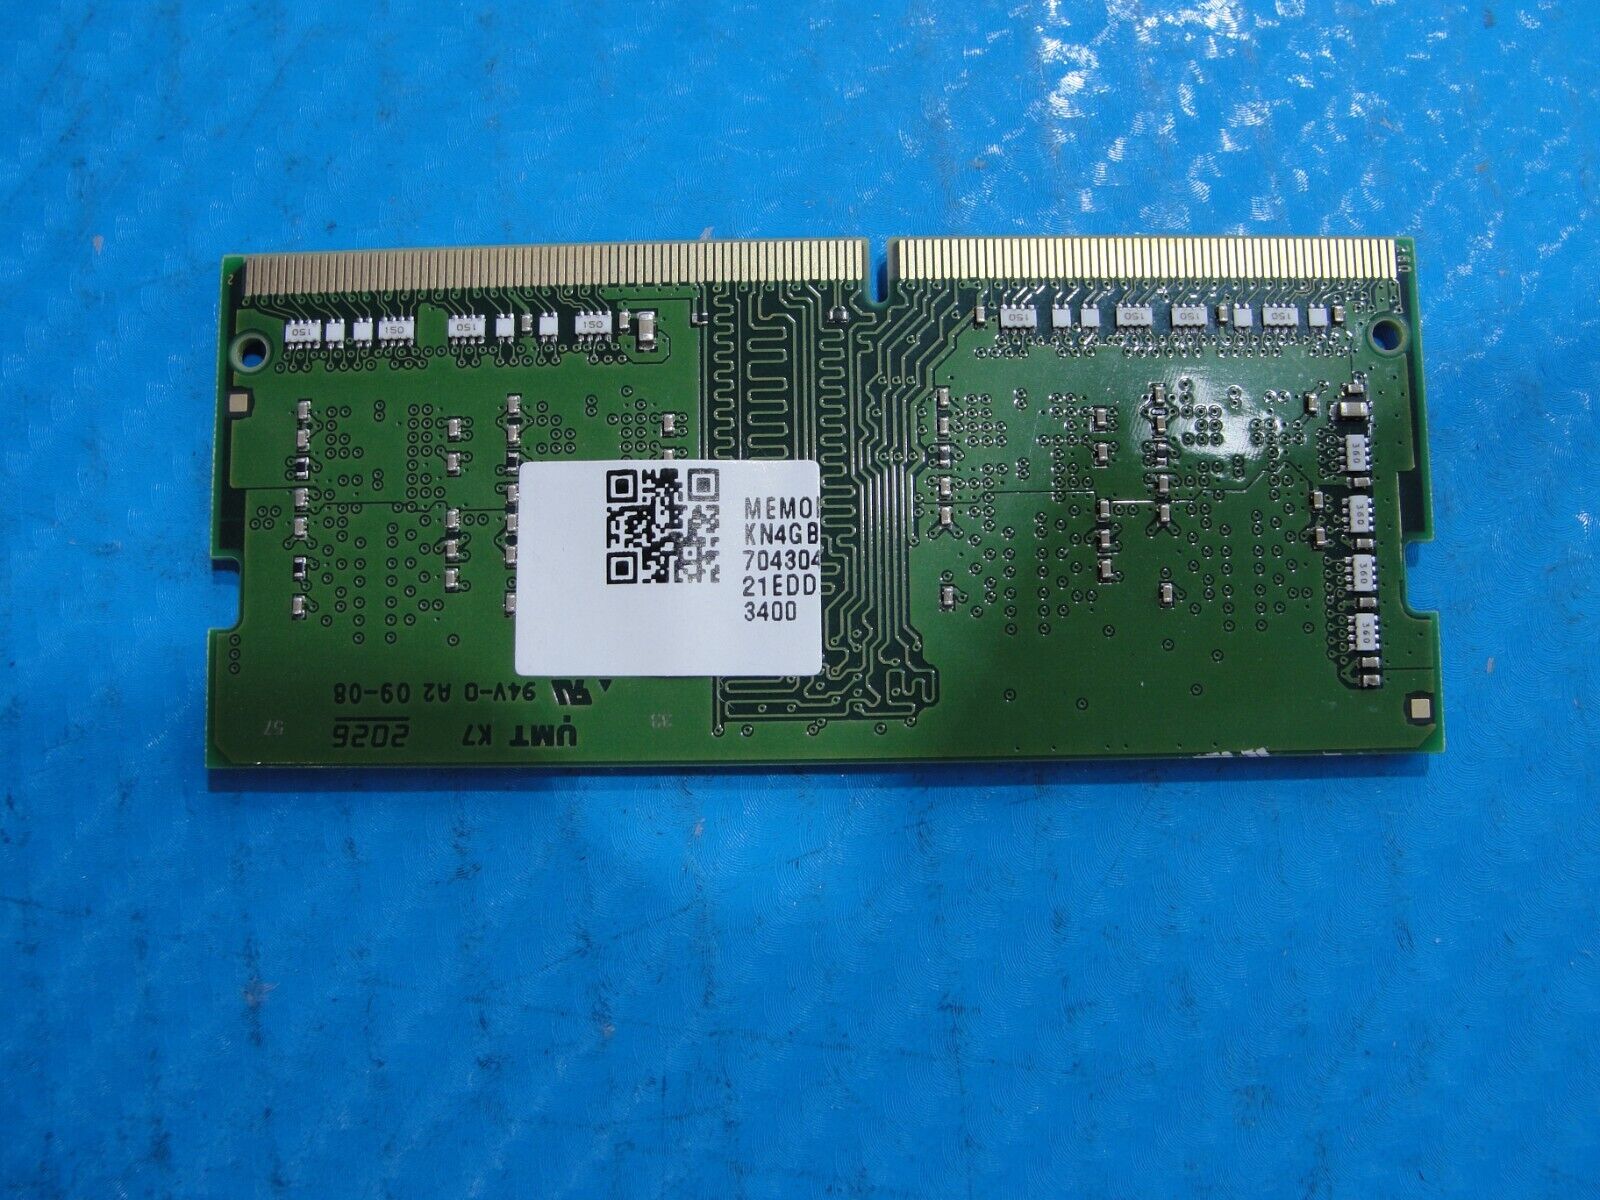 Acer A515-56-56DJ So-Dimm Kingston 4GB Memory pc4-2666v ACR26D4S9S1KA-4